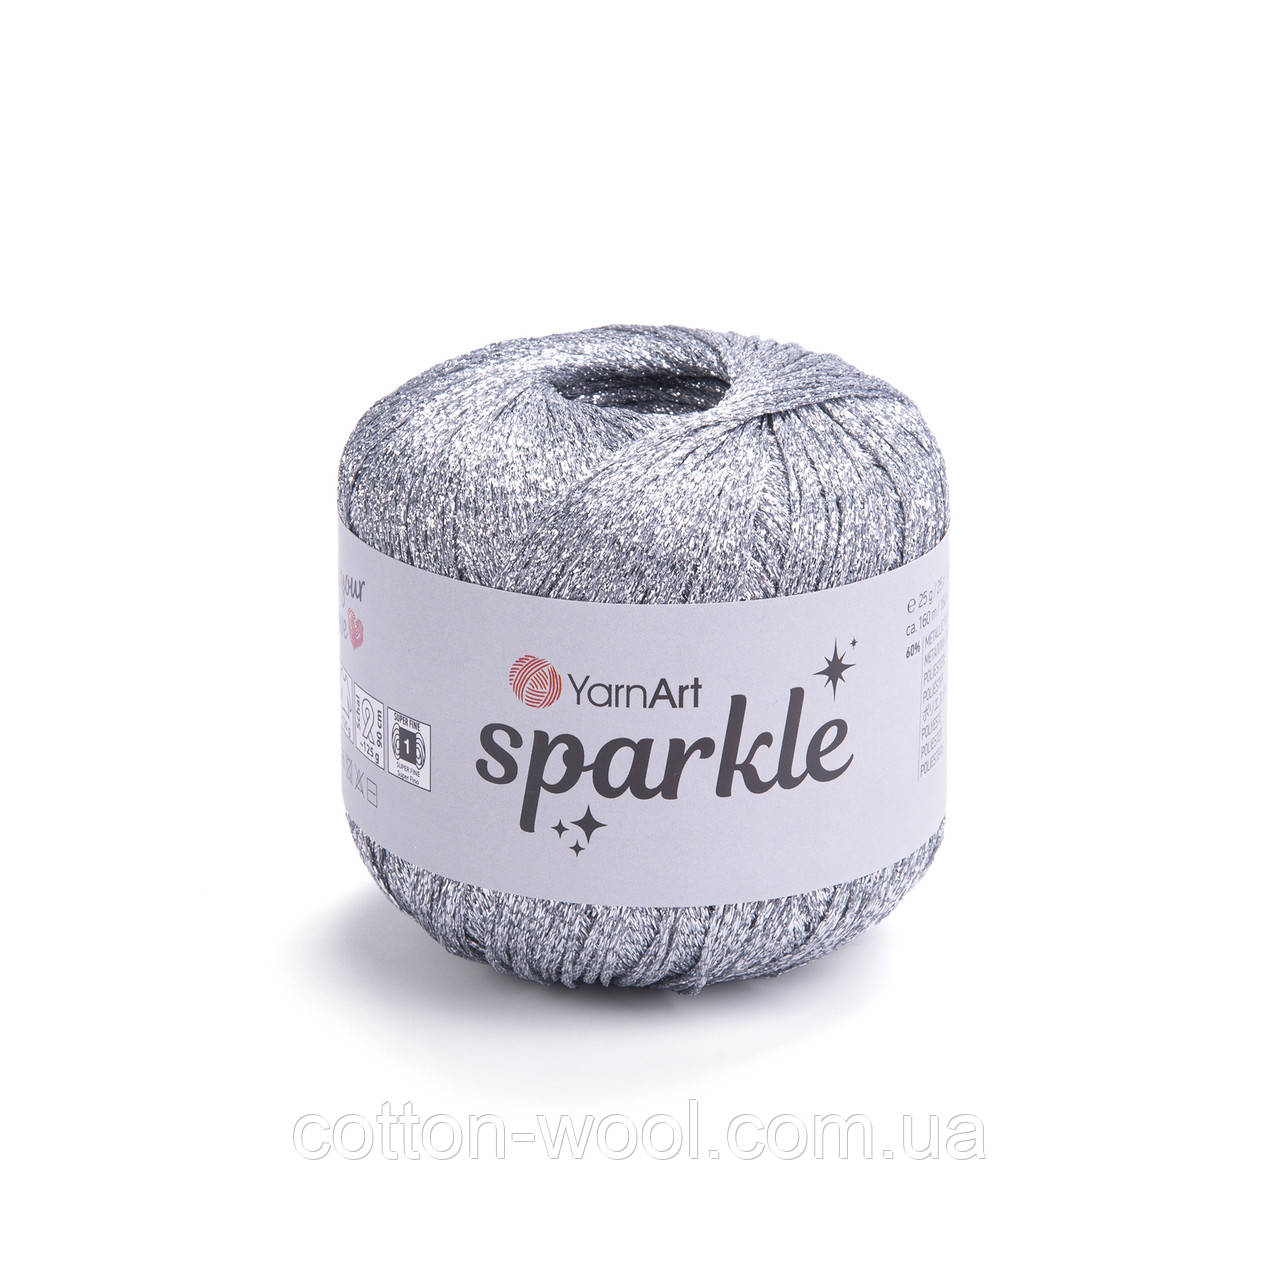 Yarnart Sparkle 60% Metallic Polyester - 40% Polyamide